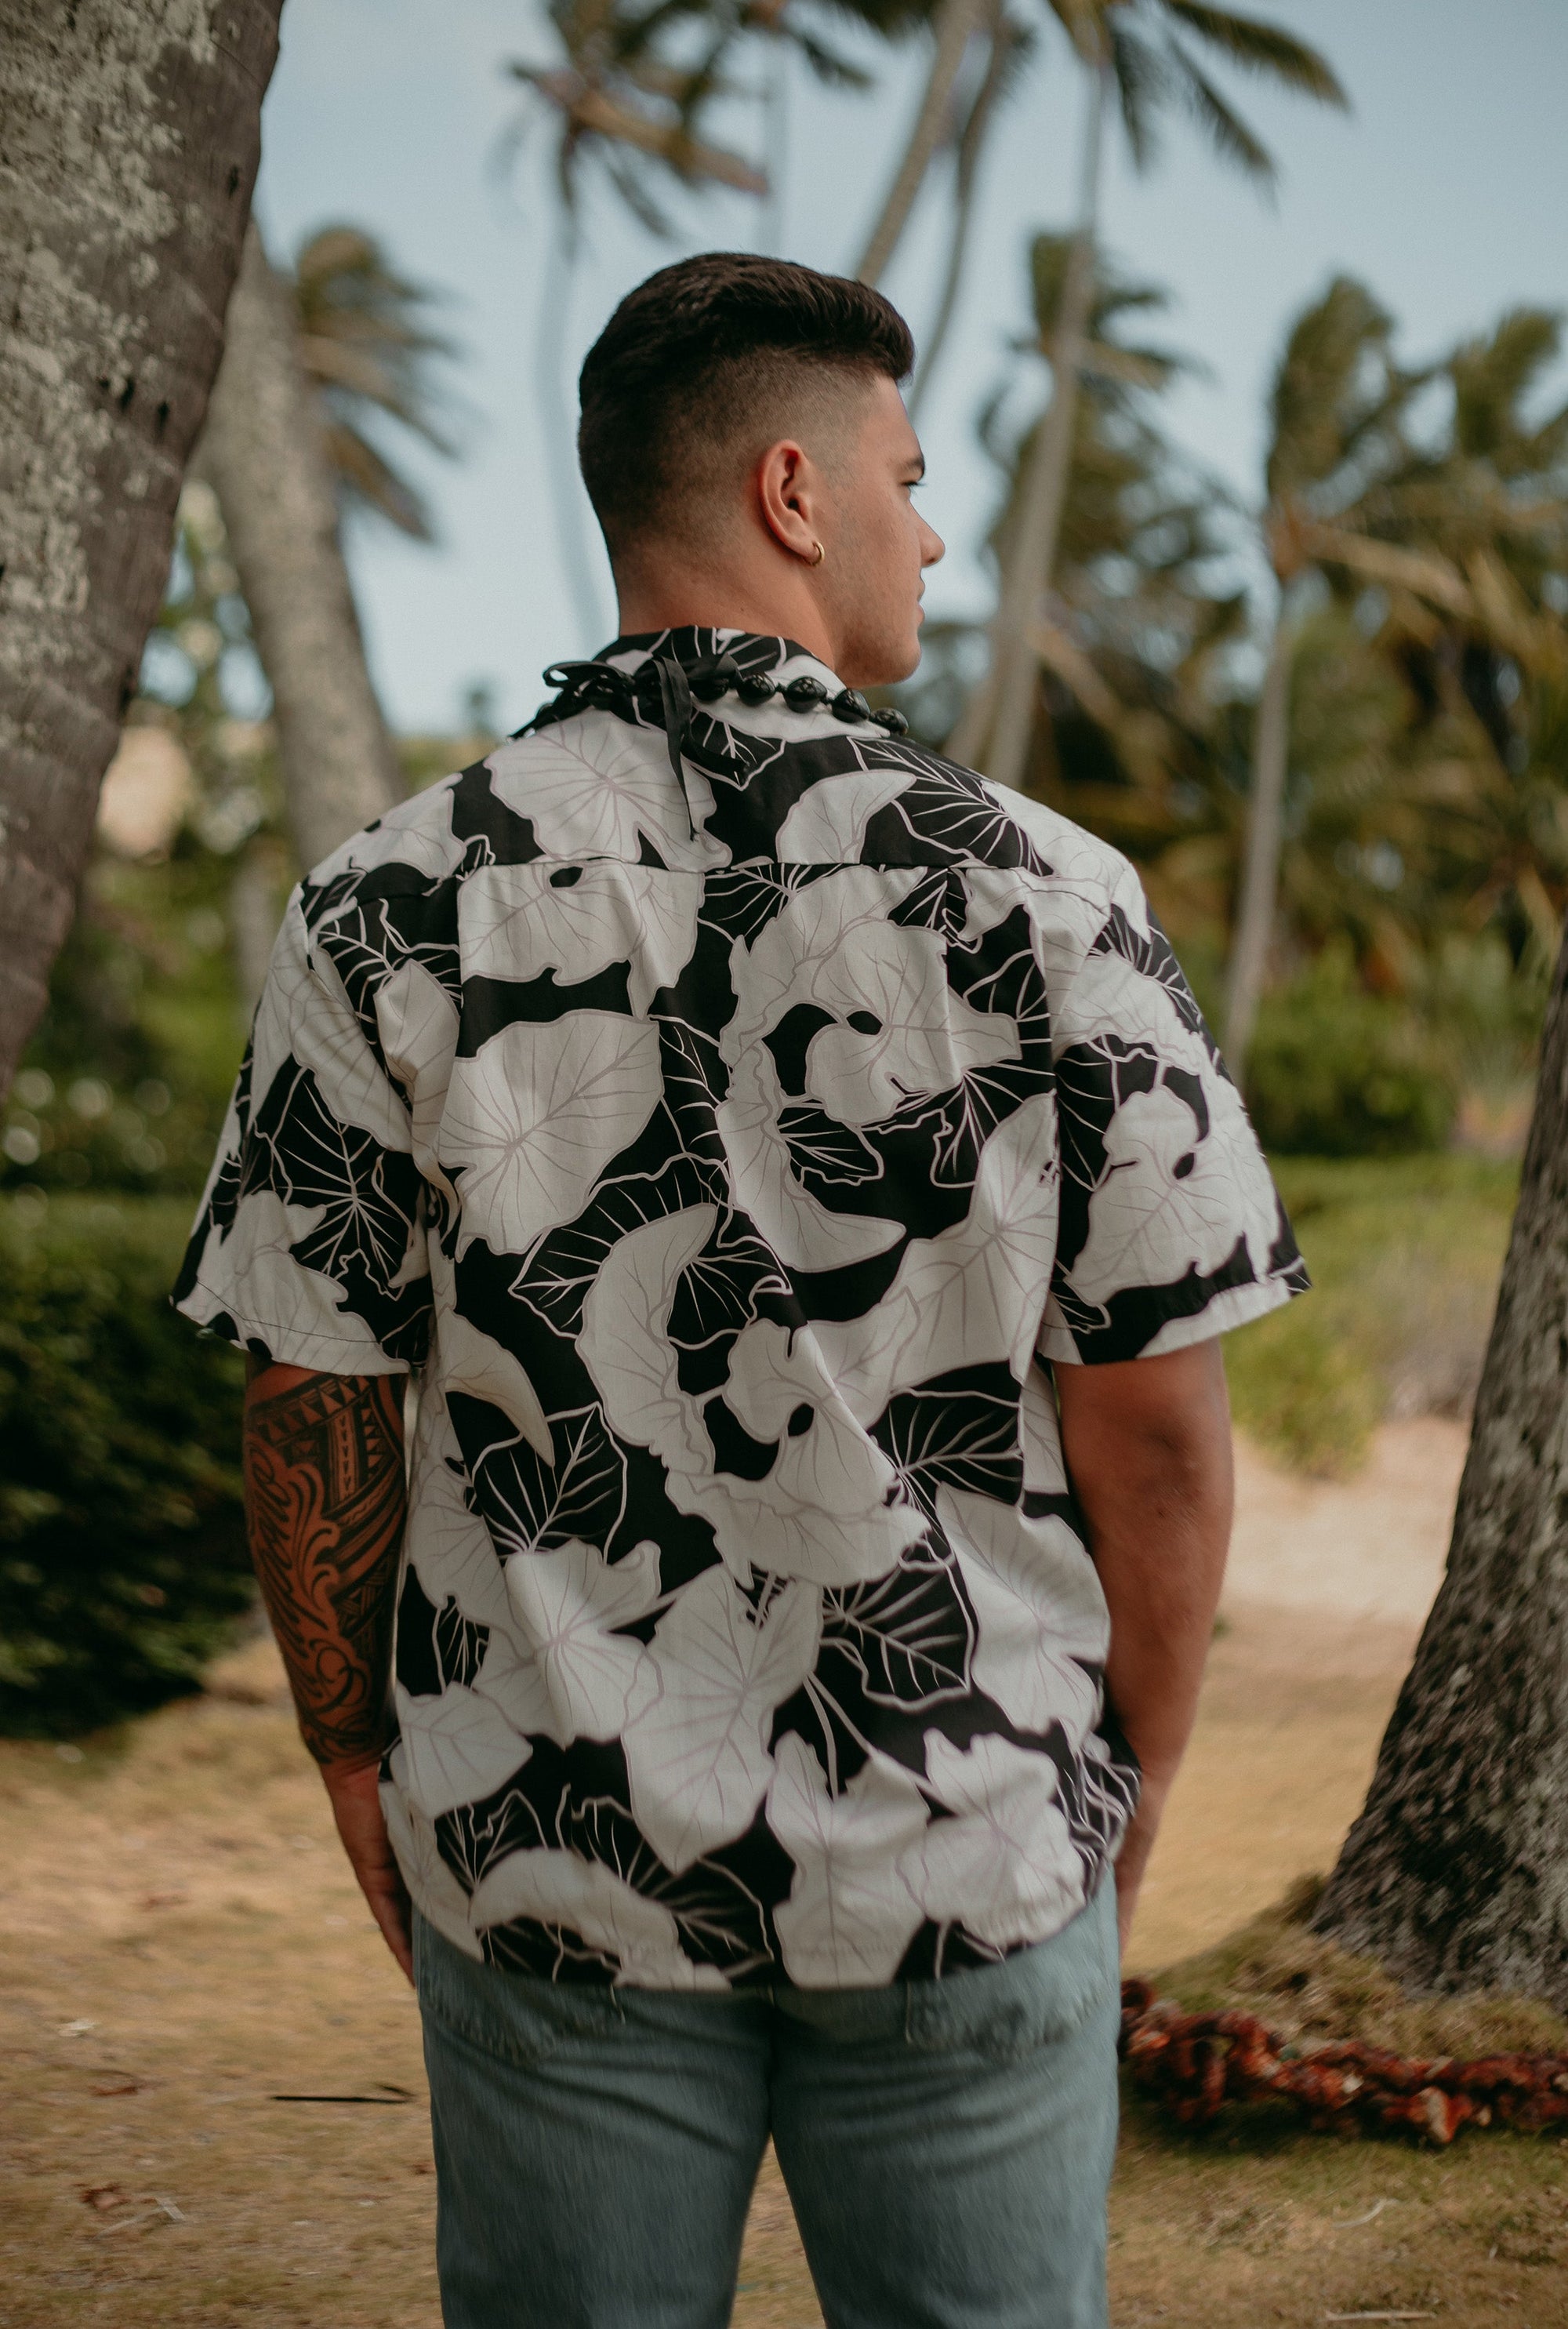 Pop-Up Mākeke - Lexbreezy Hawai'i - Men's Aloha Shirt - Kalo in Black - Back View